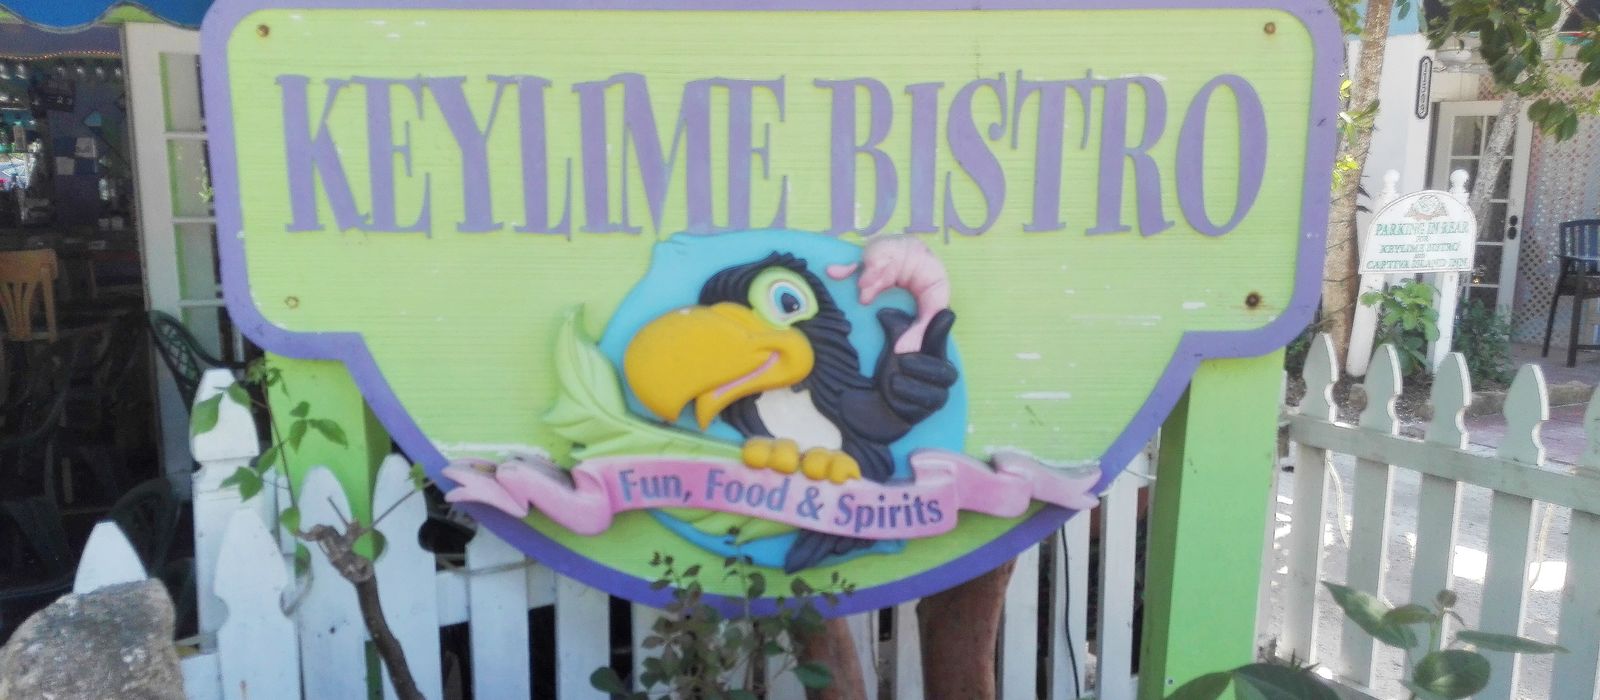 Key Lime Bistro, Captiva Island, Florida